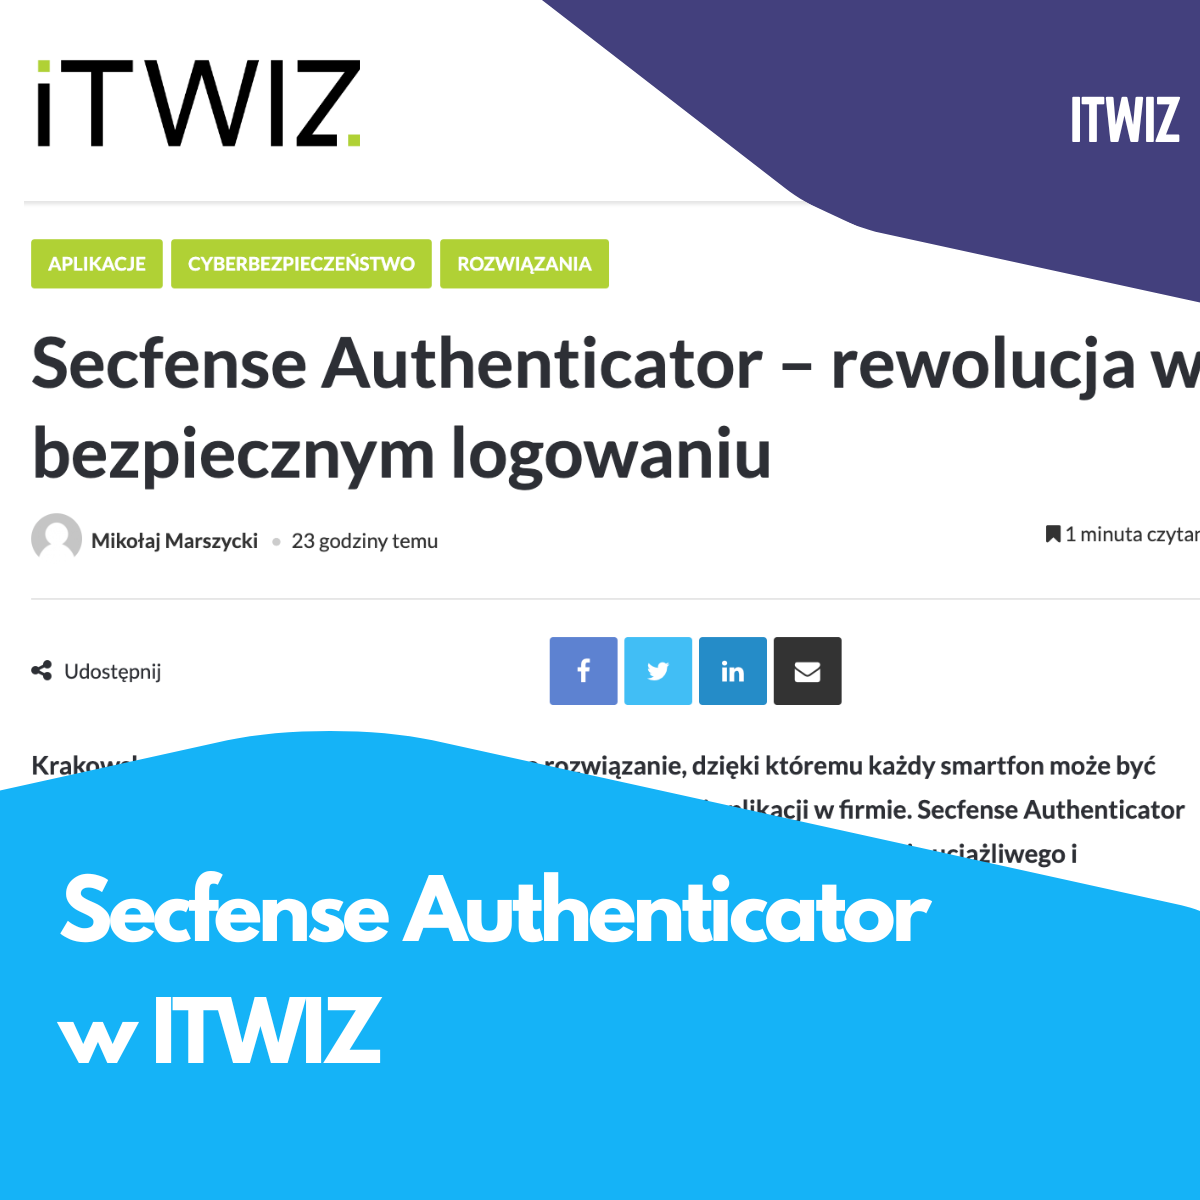 Secfense Authenticator w ITWIZ